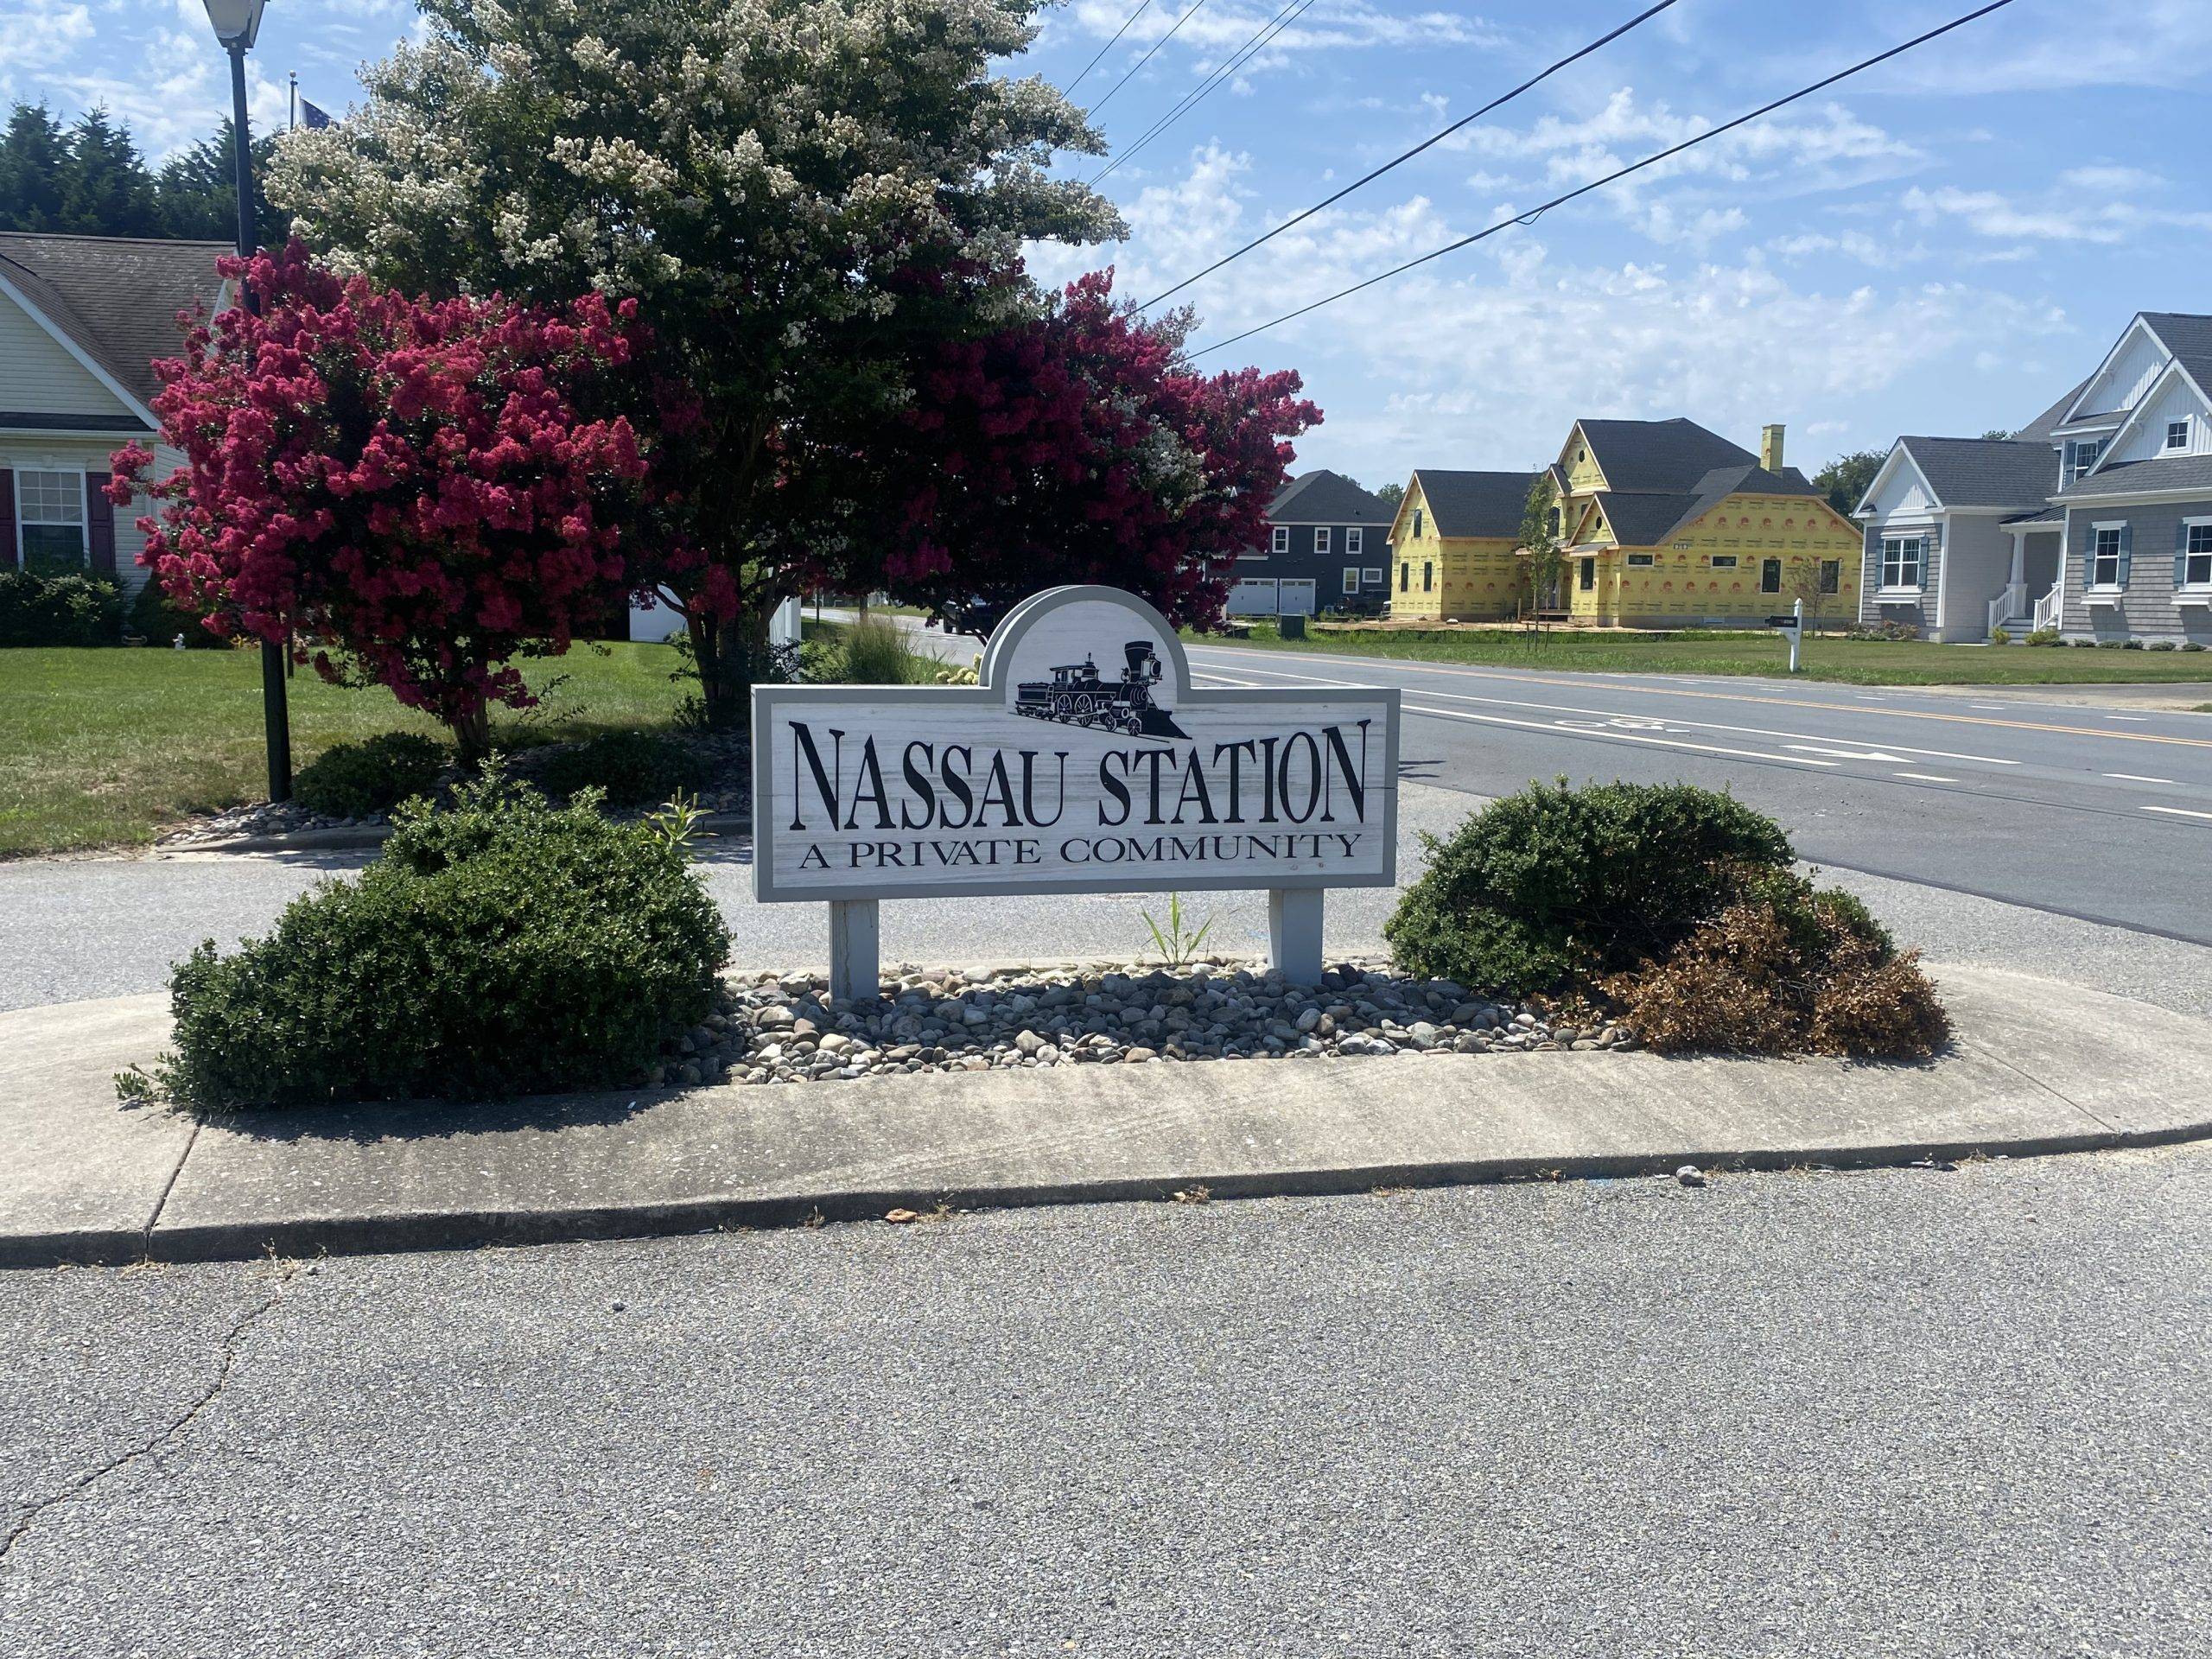 Nassau Station